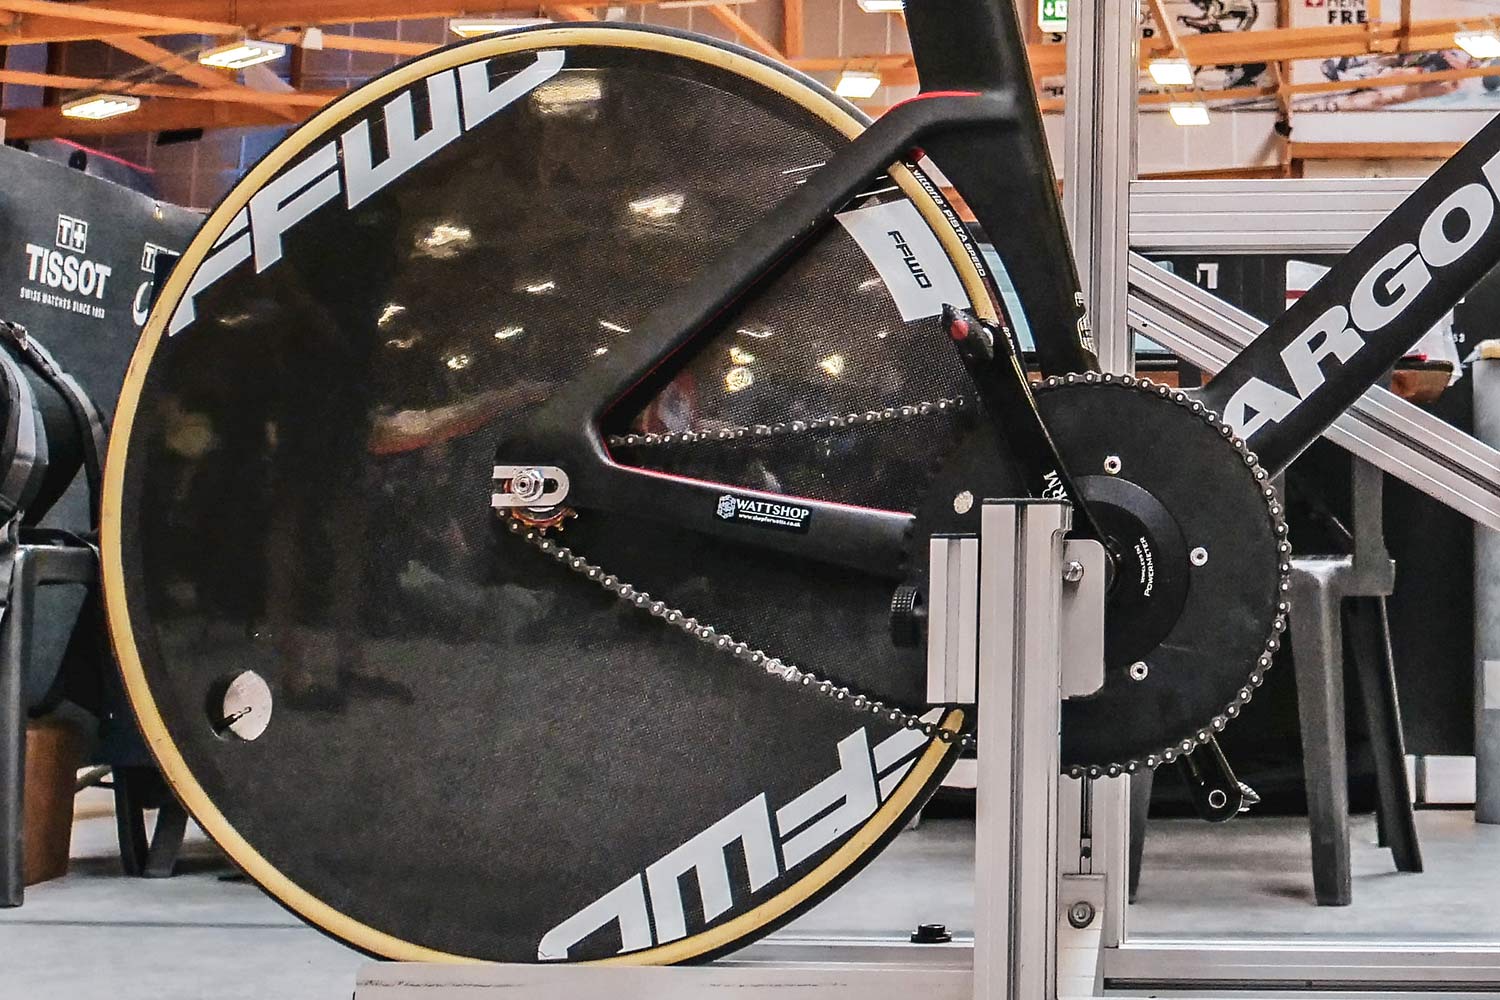 Joss Lowden Women's Hour Record 48405m LeCol Argon 18 Electron Pro custom track bike, WattShop drivetrain